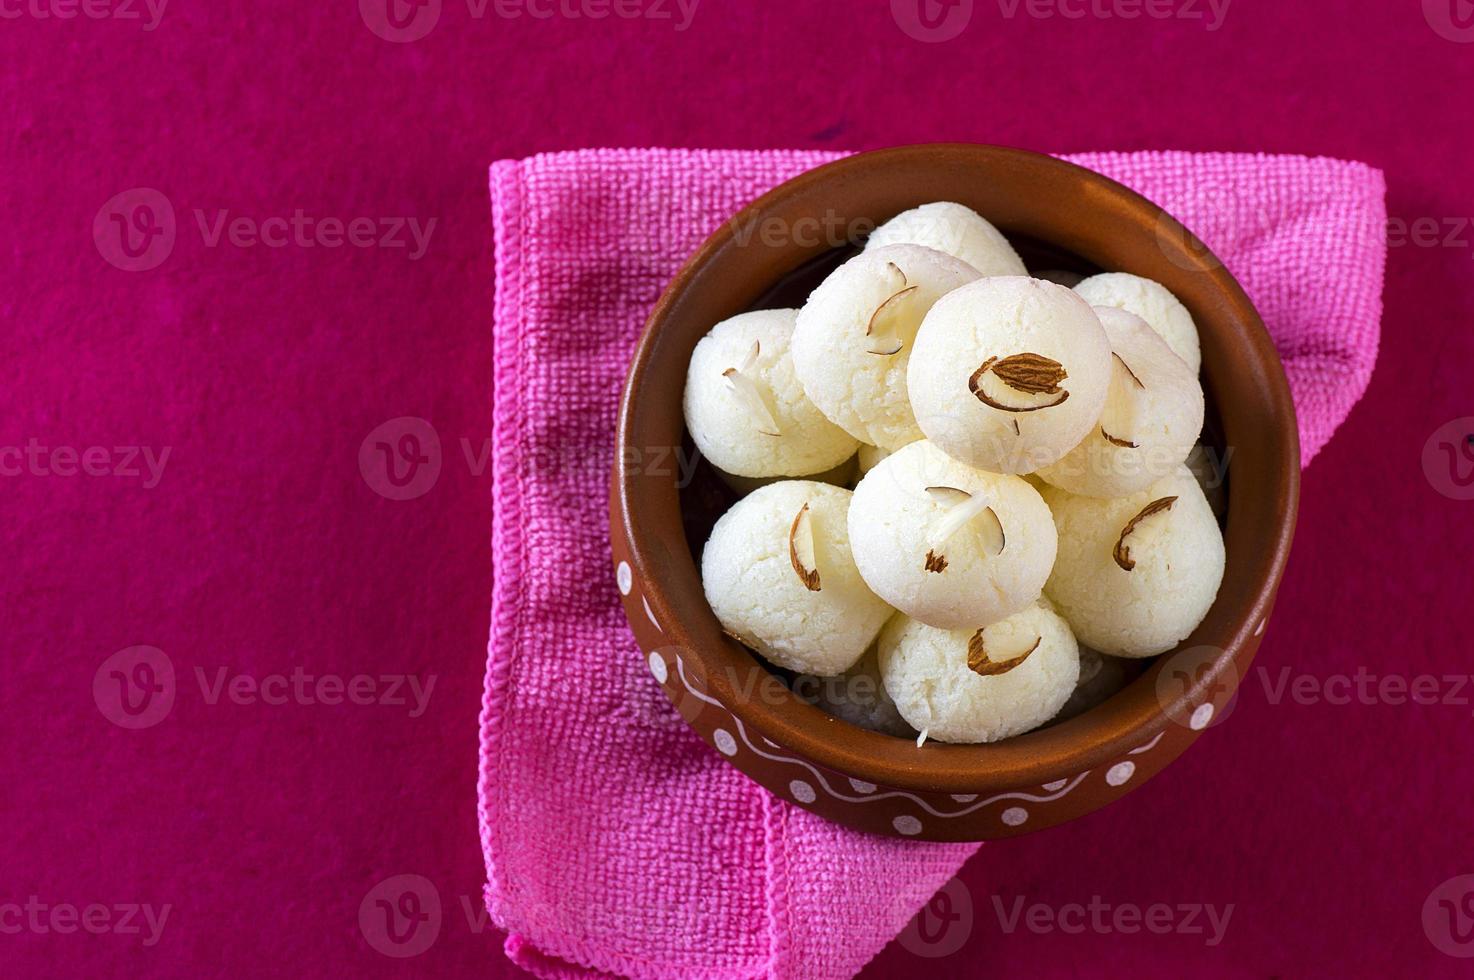 Indiaas snoepje - rasgulla, beroemd Bengaals snoepje in kleikom met servet op roze achtergrond foto